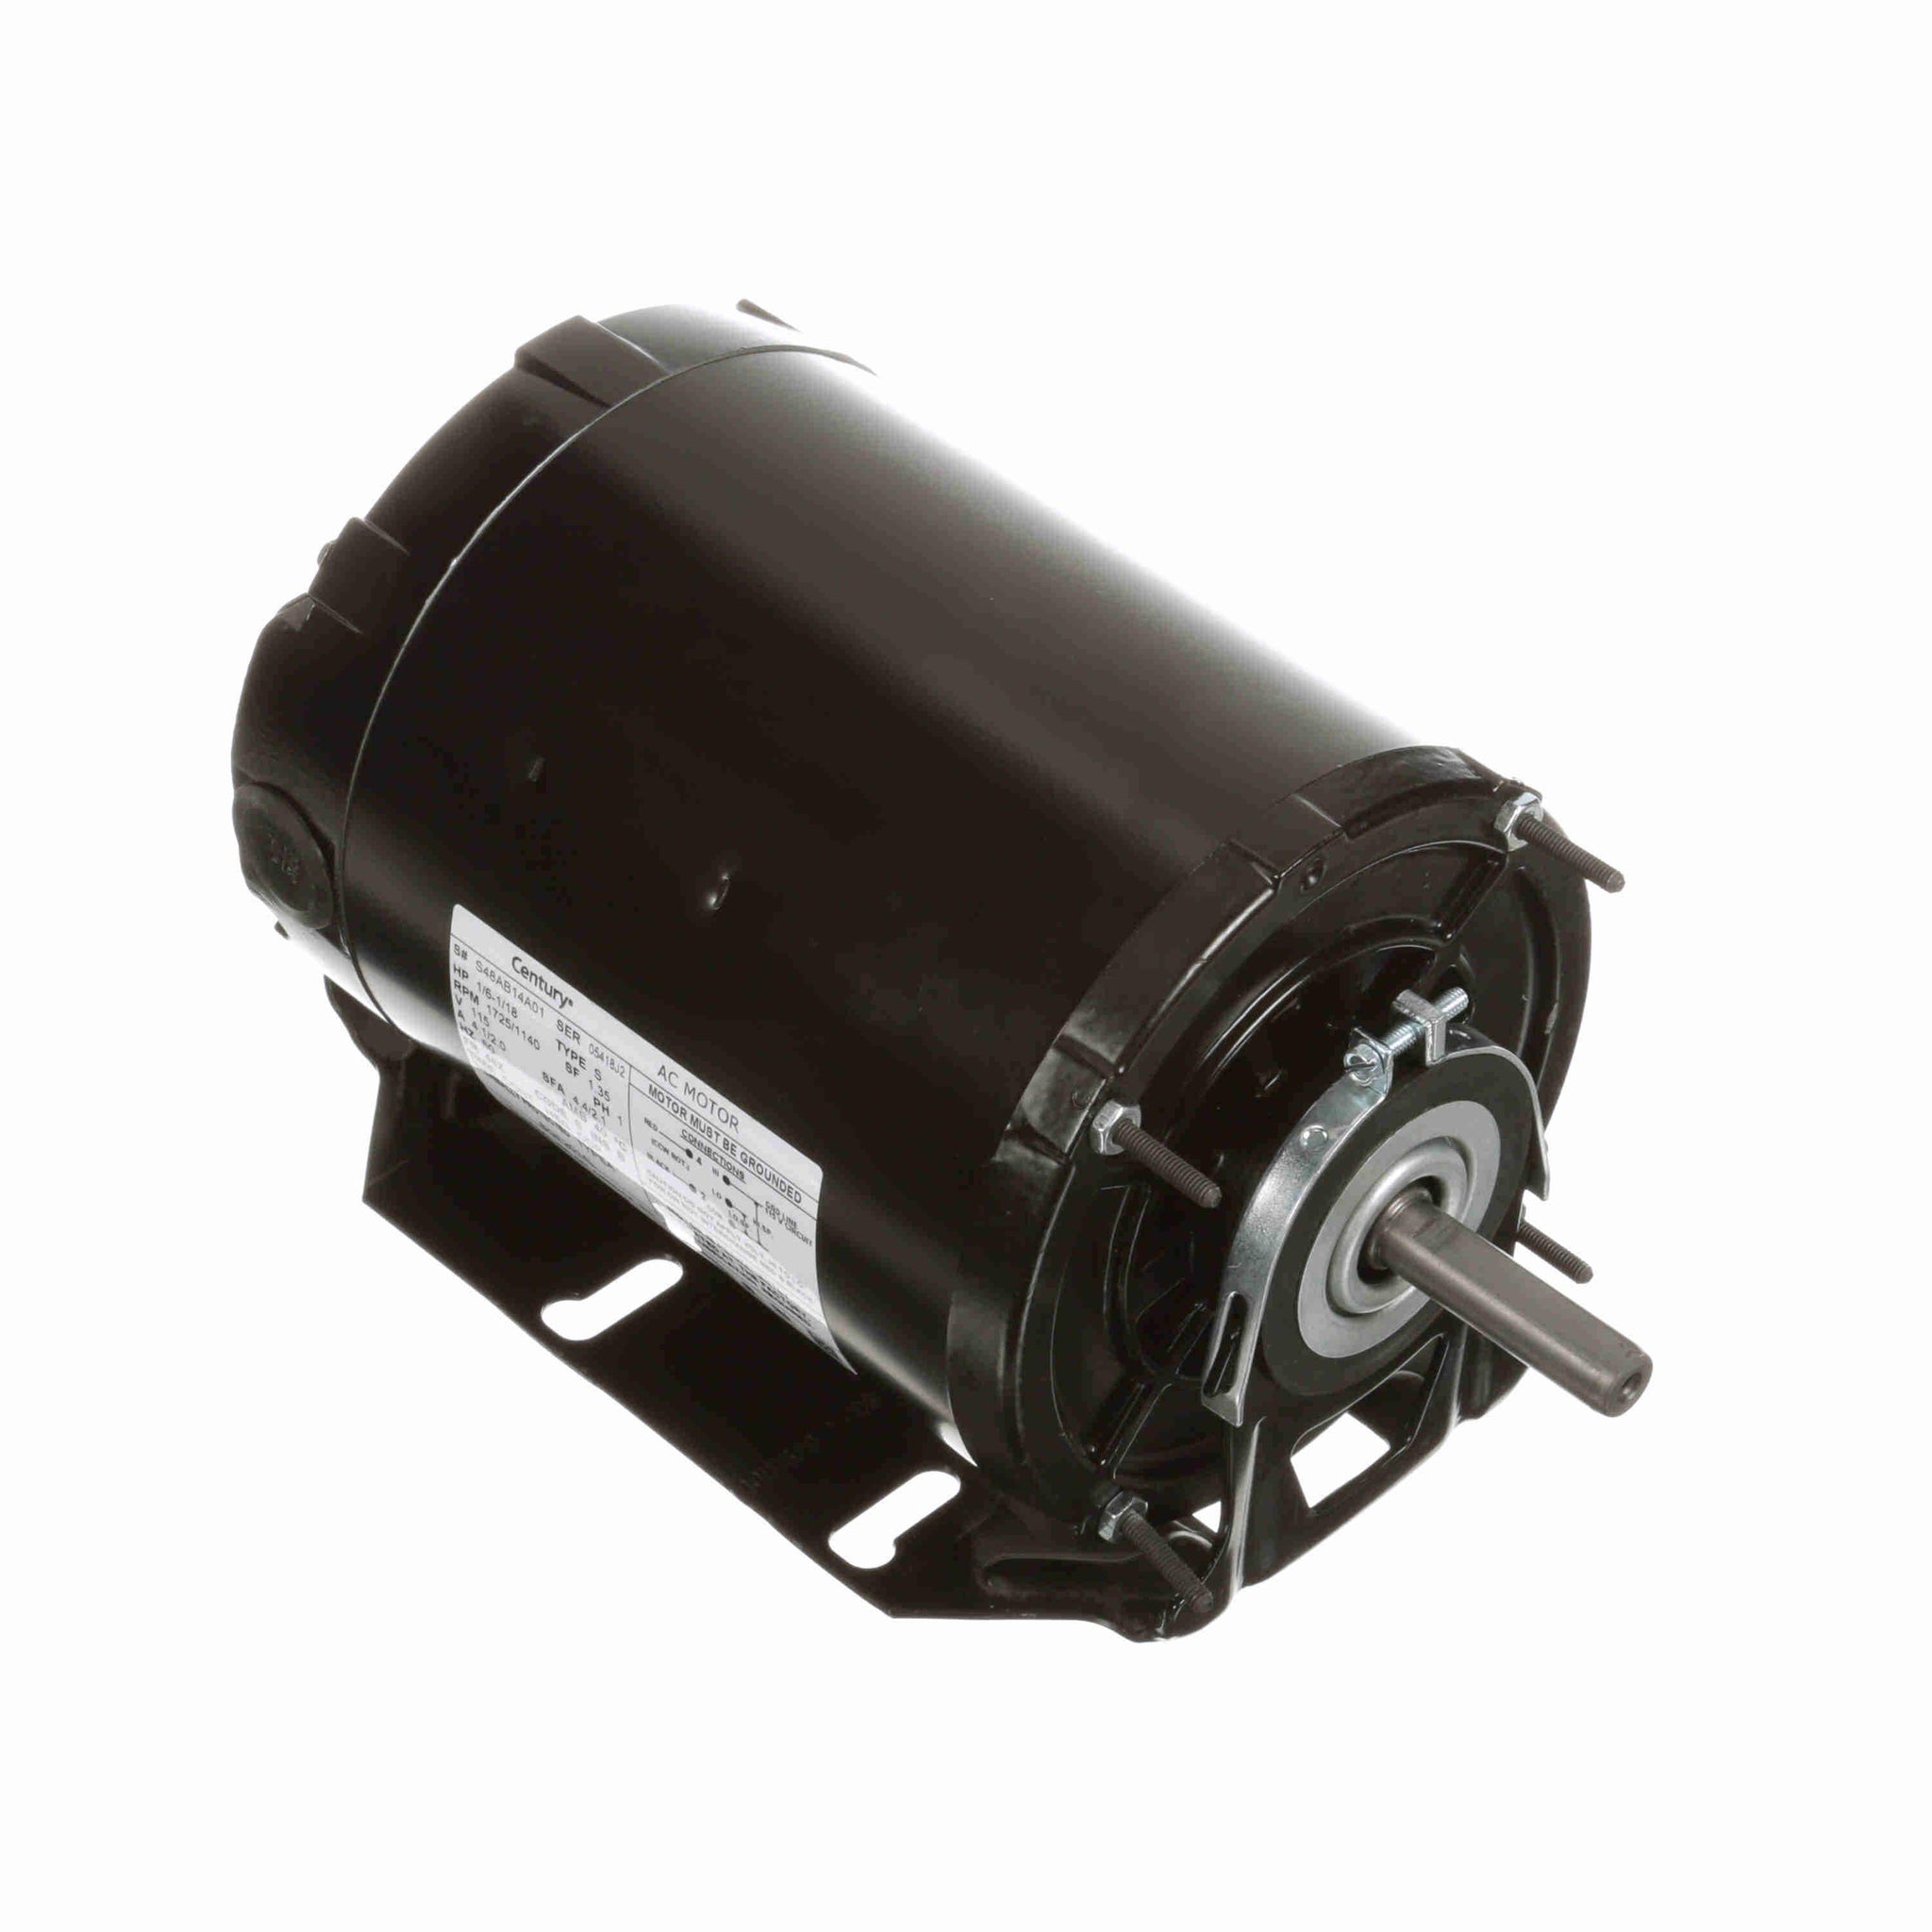 BGF2014L -  1/6-1/18 HP Fan and Blower HVAC/R Motor, 1 phase, 1800 RPM, 115 V, 48Z Frame, ODP - Hardware & Moreee